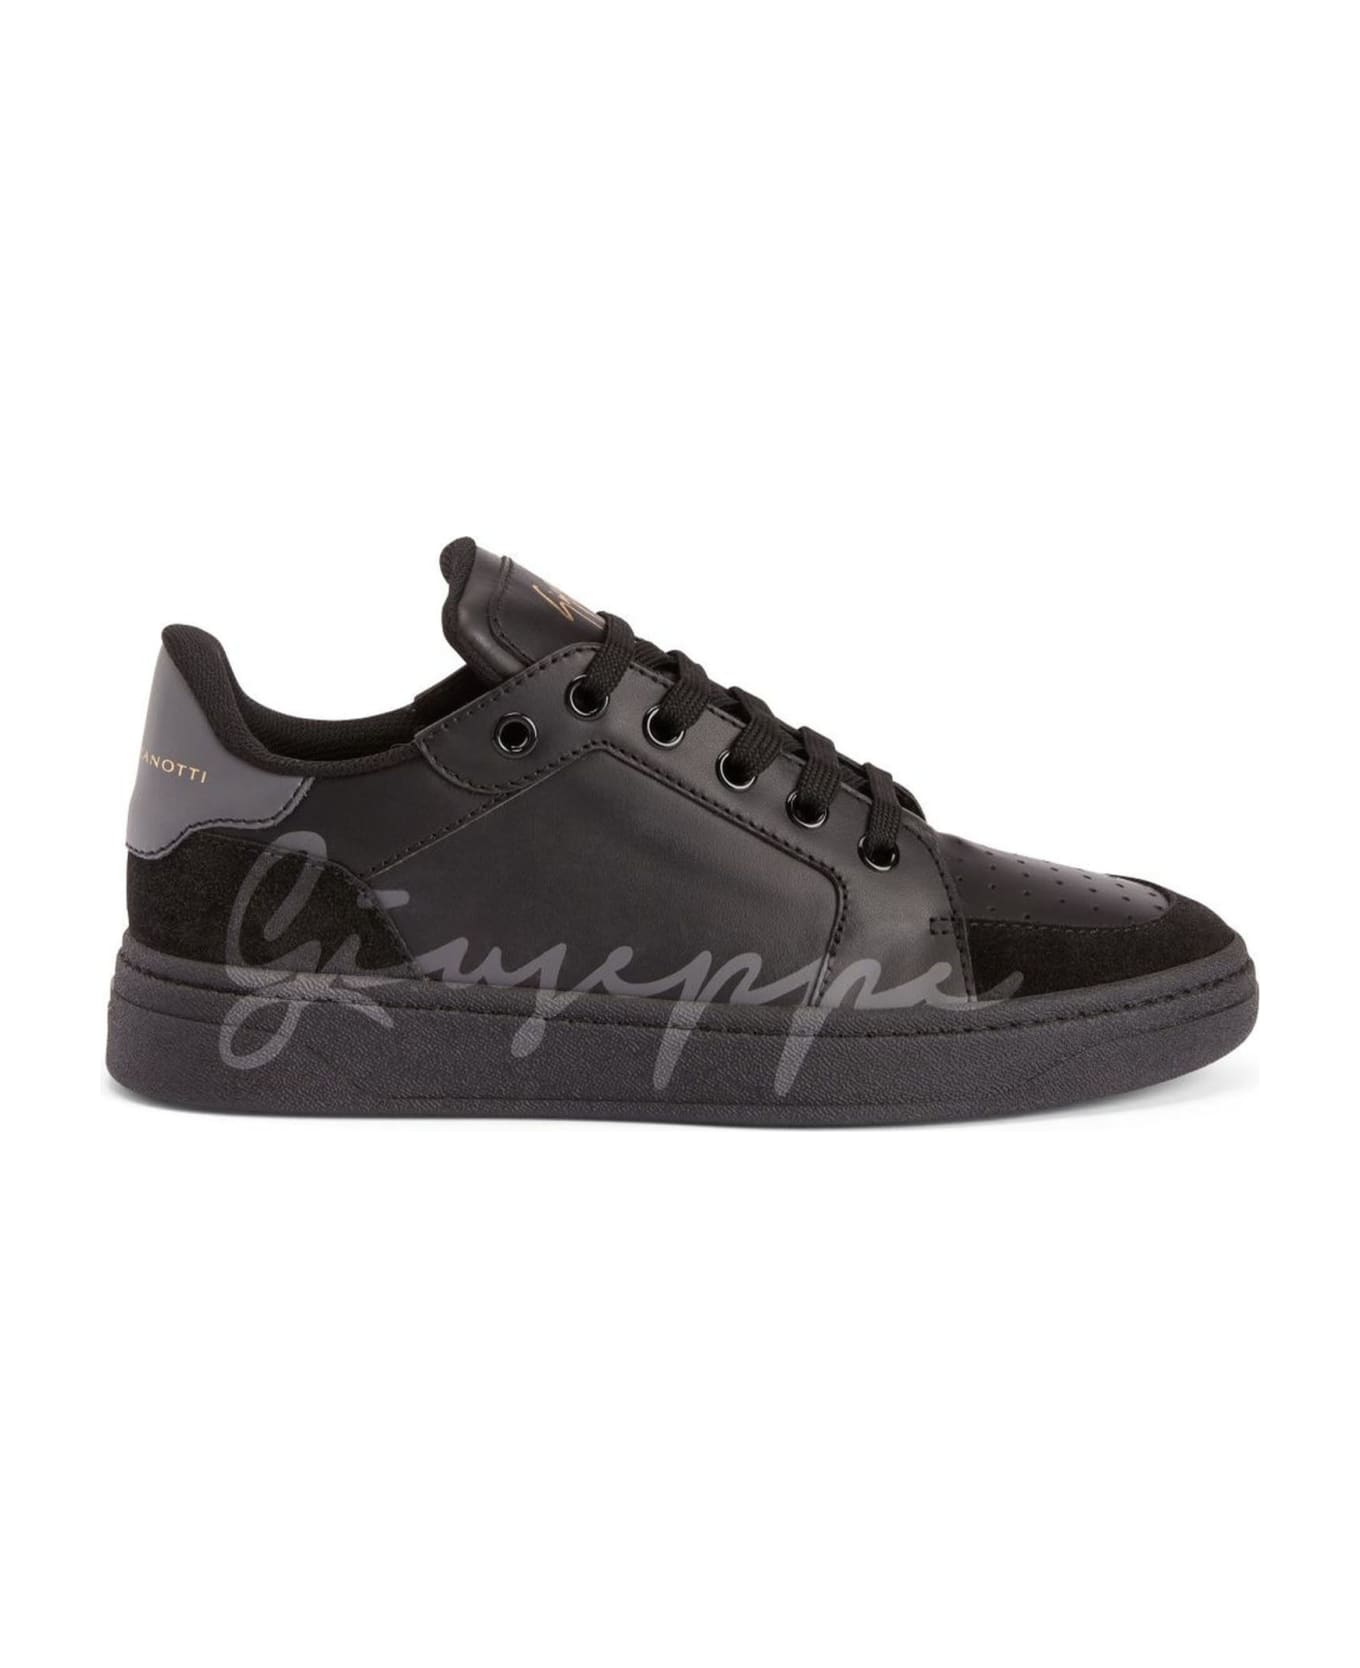 Giuseppe Zanotti Black Leather Low-top Gz94 Sneakers - Black